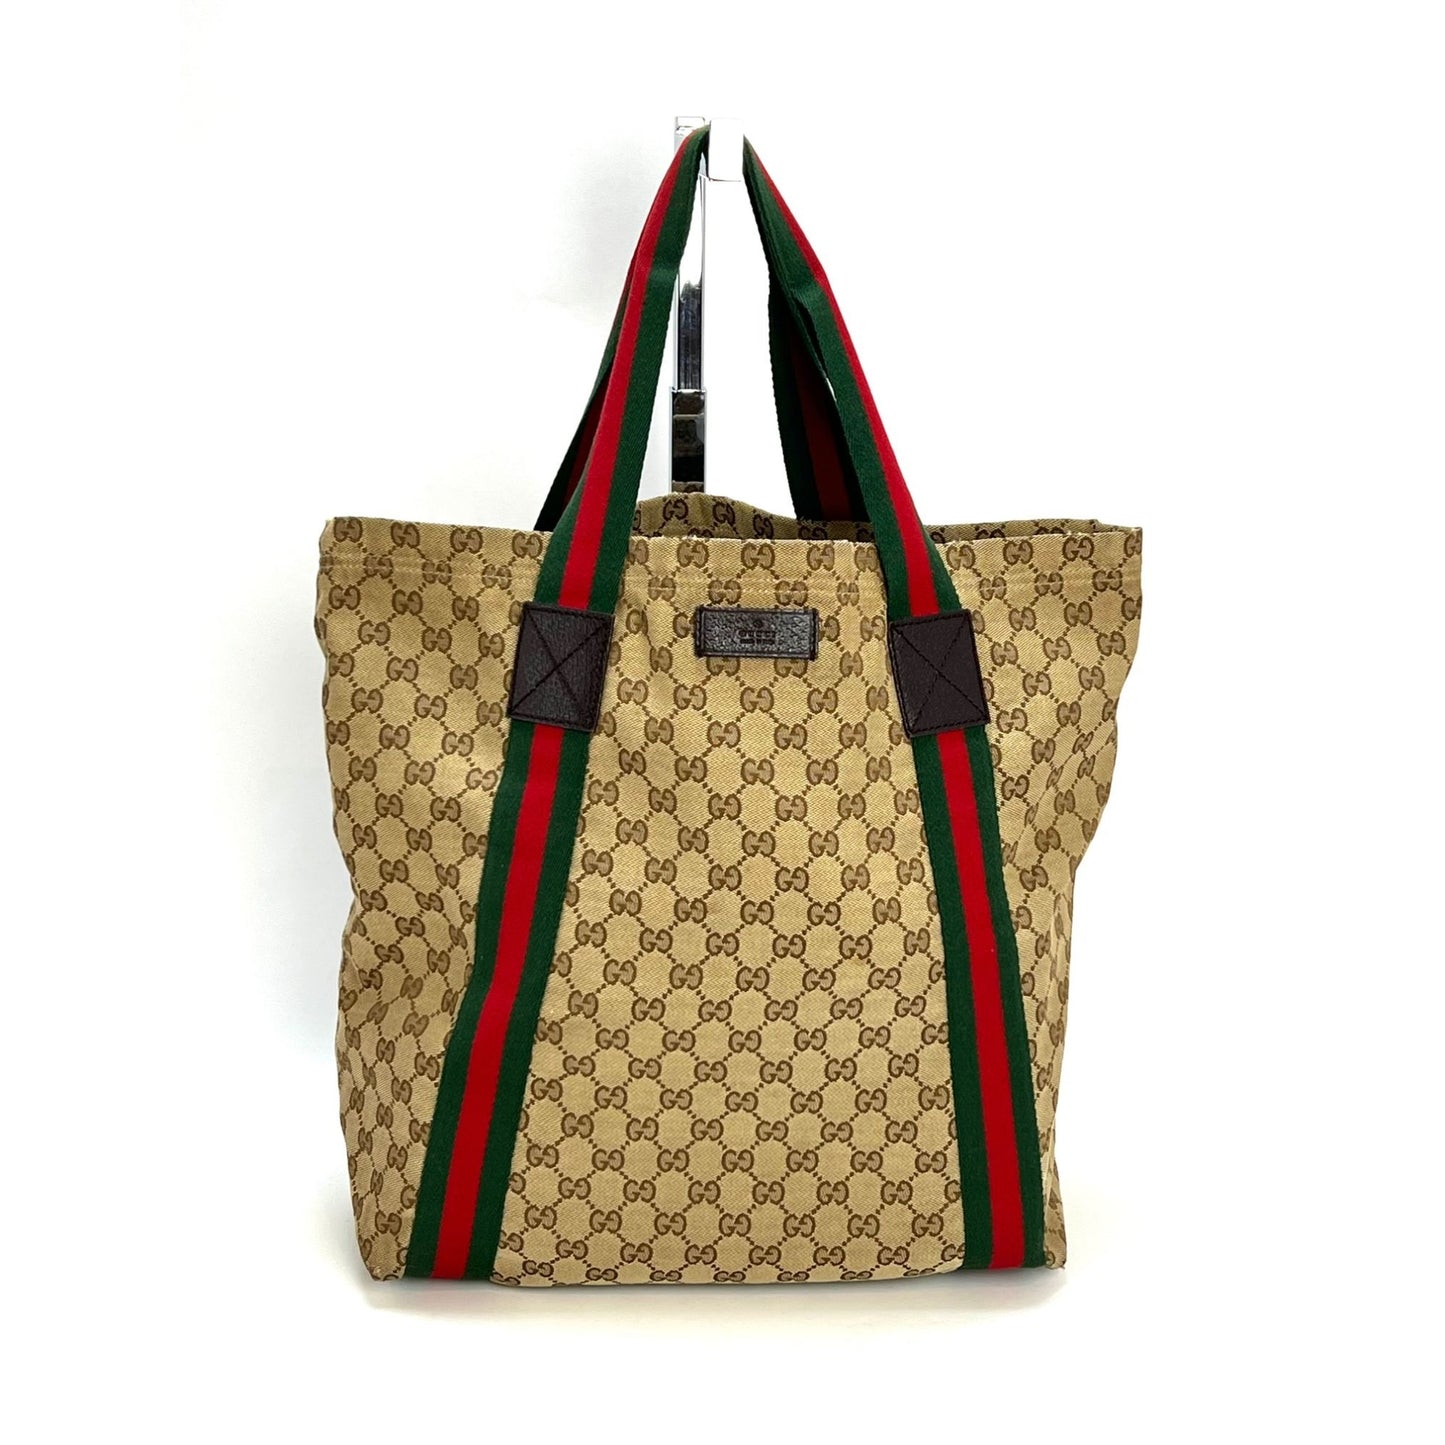 Shop Pre-Owned Luxury Bags From Top Designers – Debsluxurycloset